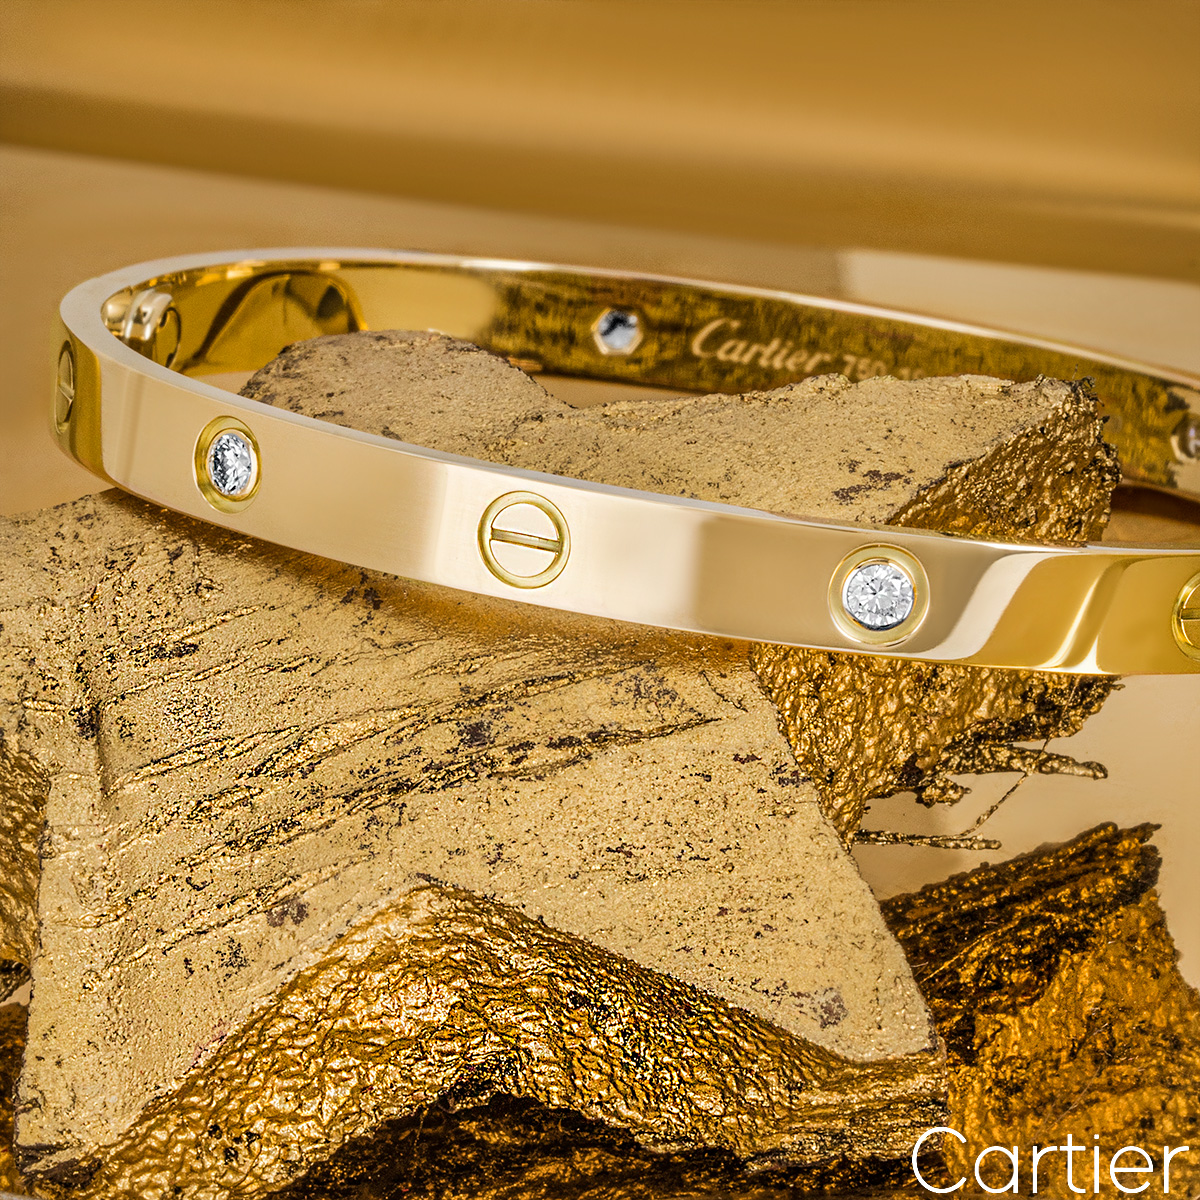 Cartier Yellow Gold Half Diamond Love Bracelet Size 19 B6035919